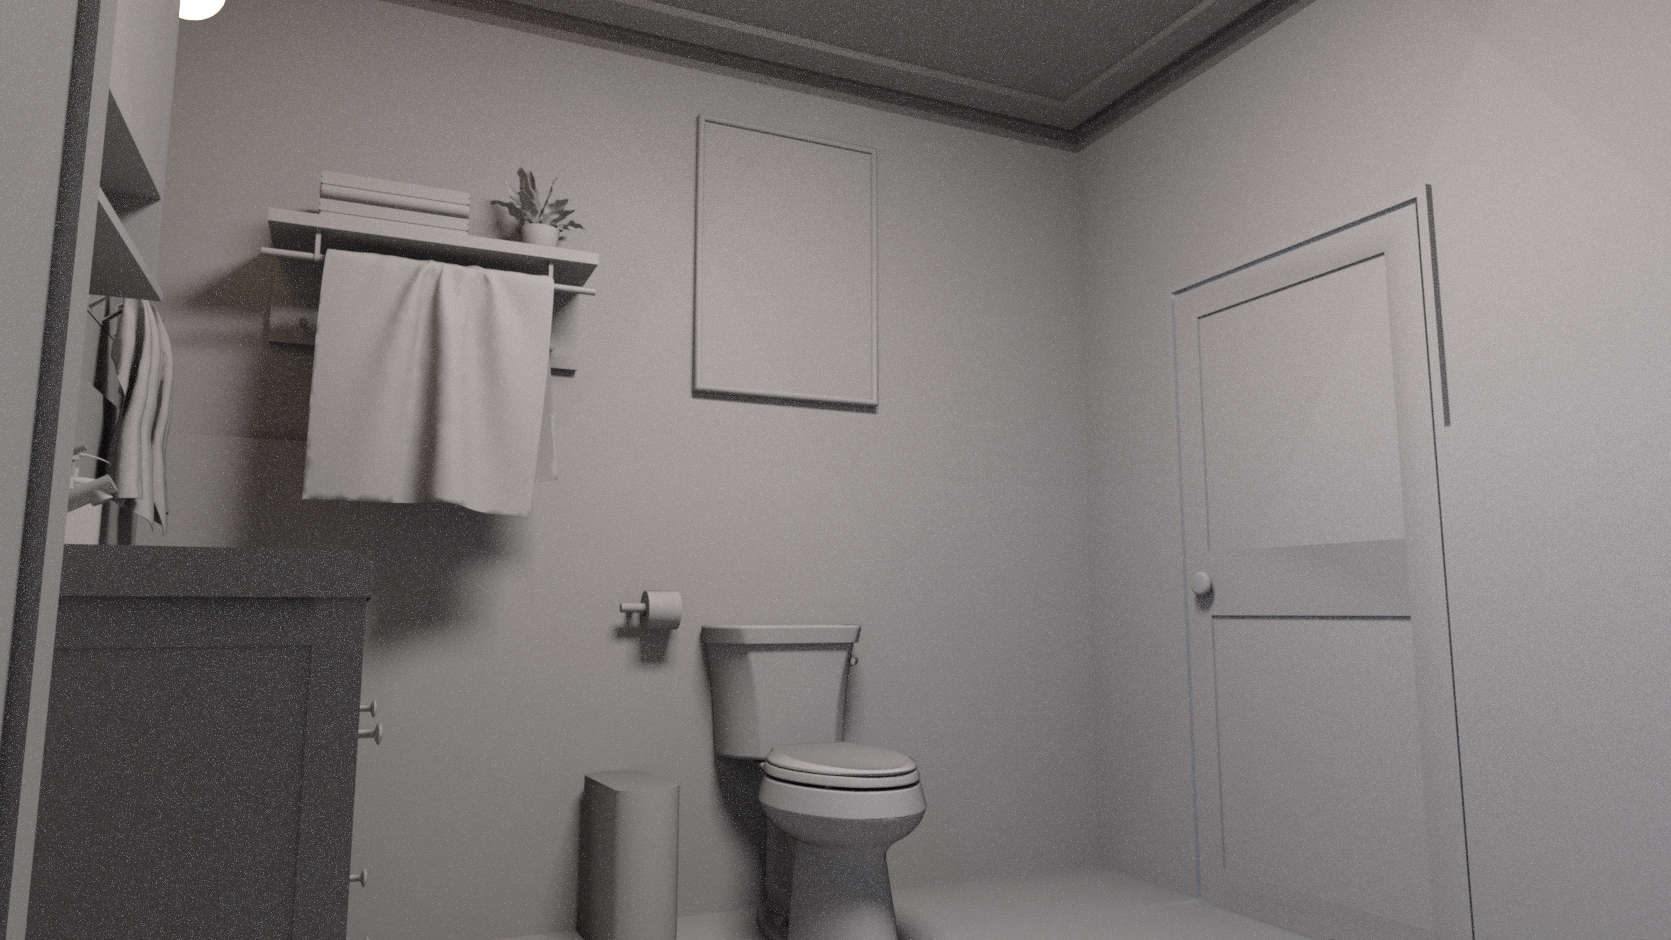 Apartment Bathroom by: Digitallab3D, 3D Models by Daz 3D